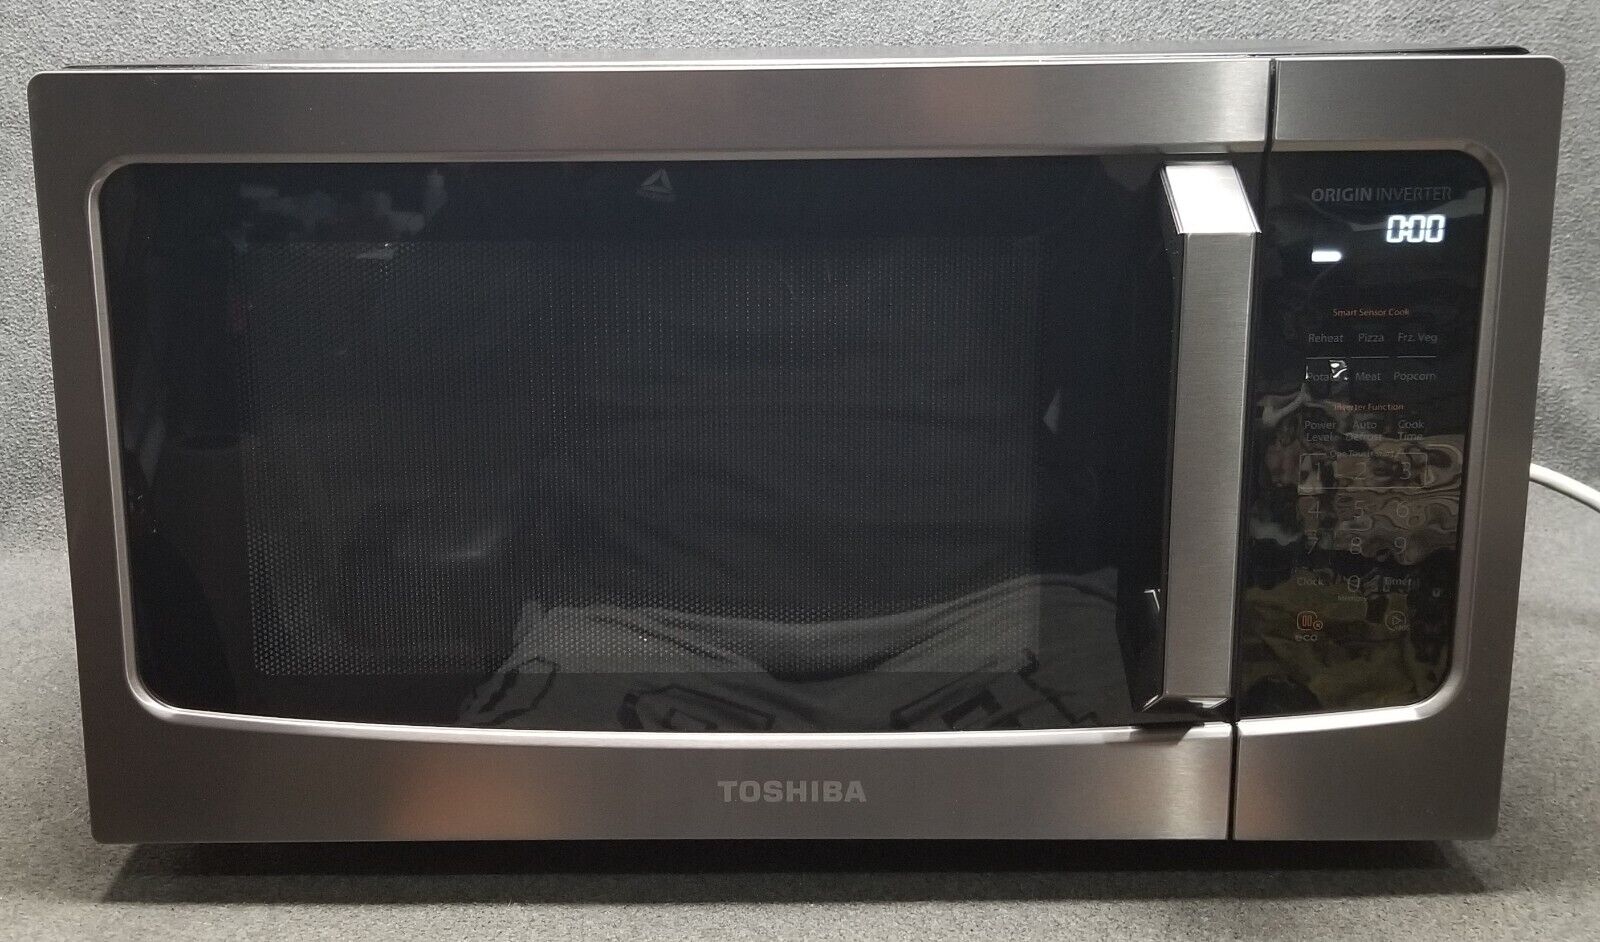 Toshiba Ml-em45pit(bs) Microwave Oven W Origin Inverter Technology Lcd Display